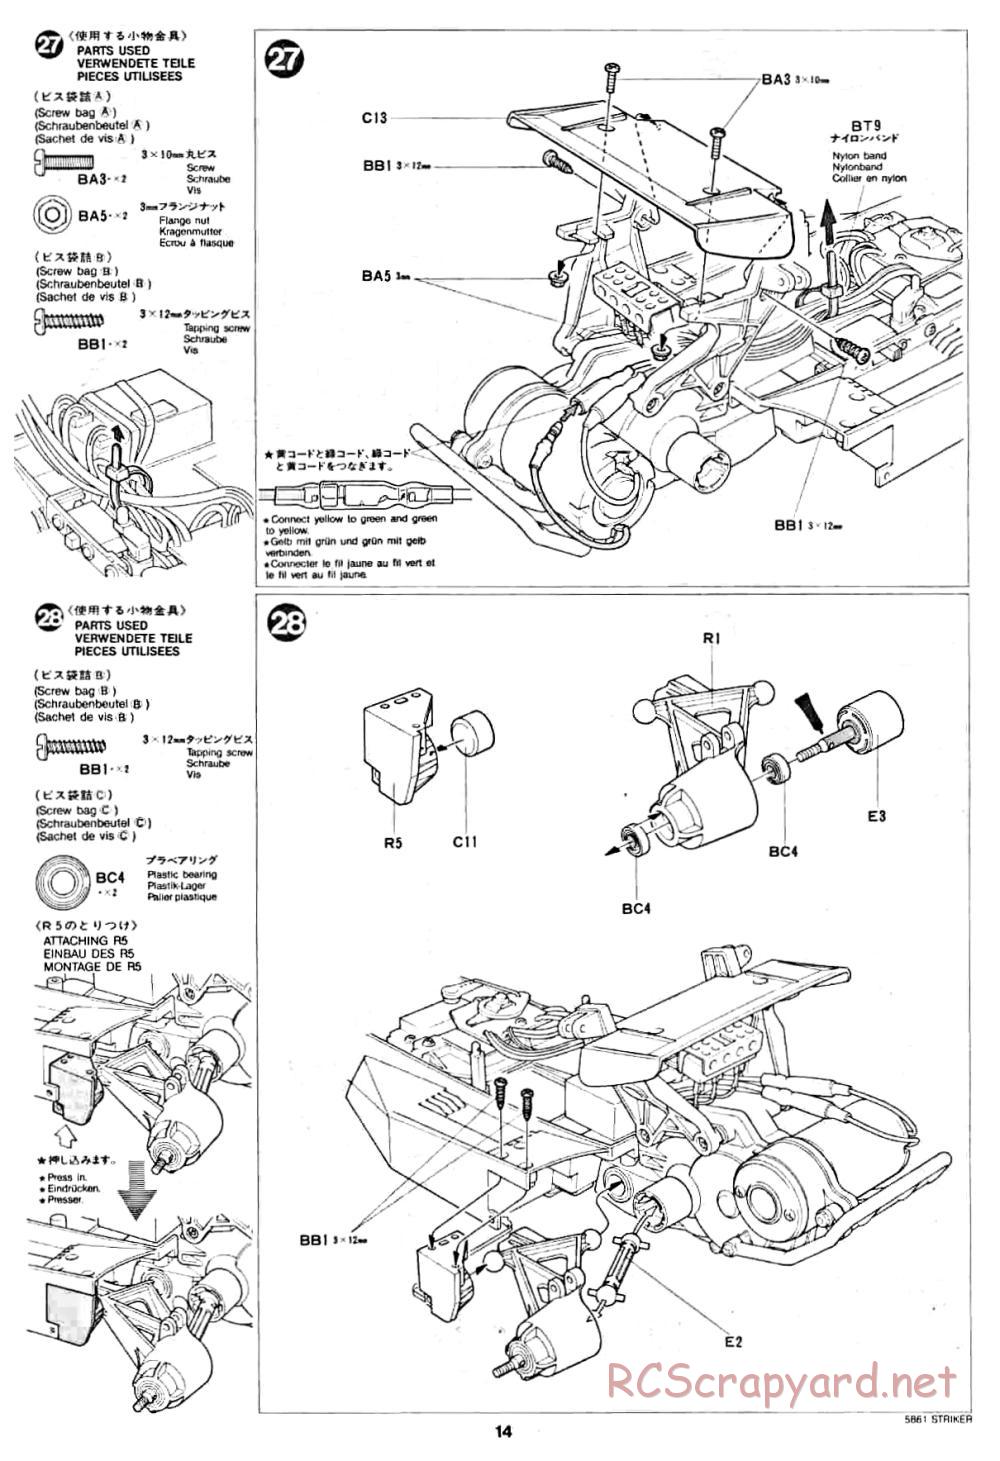 Tamiya - Striker - 58061 - Manual - Page 14